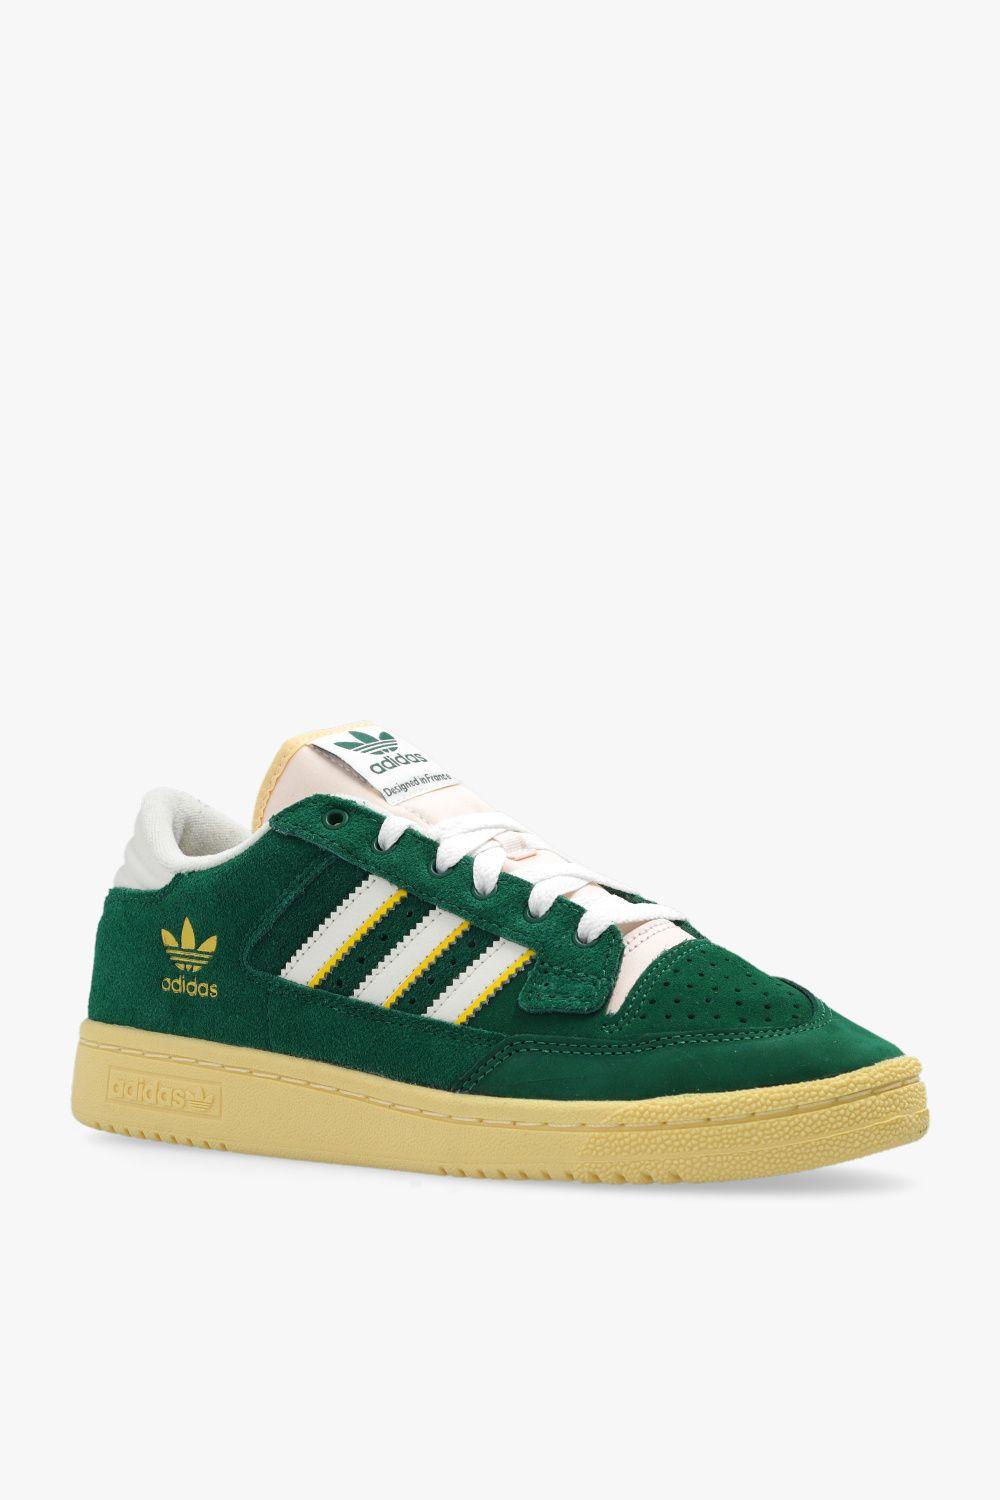 adidas Originals 'centennial 85 Low' Sneakers in Green | Lyst